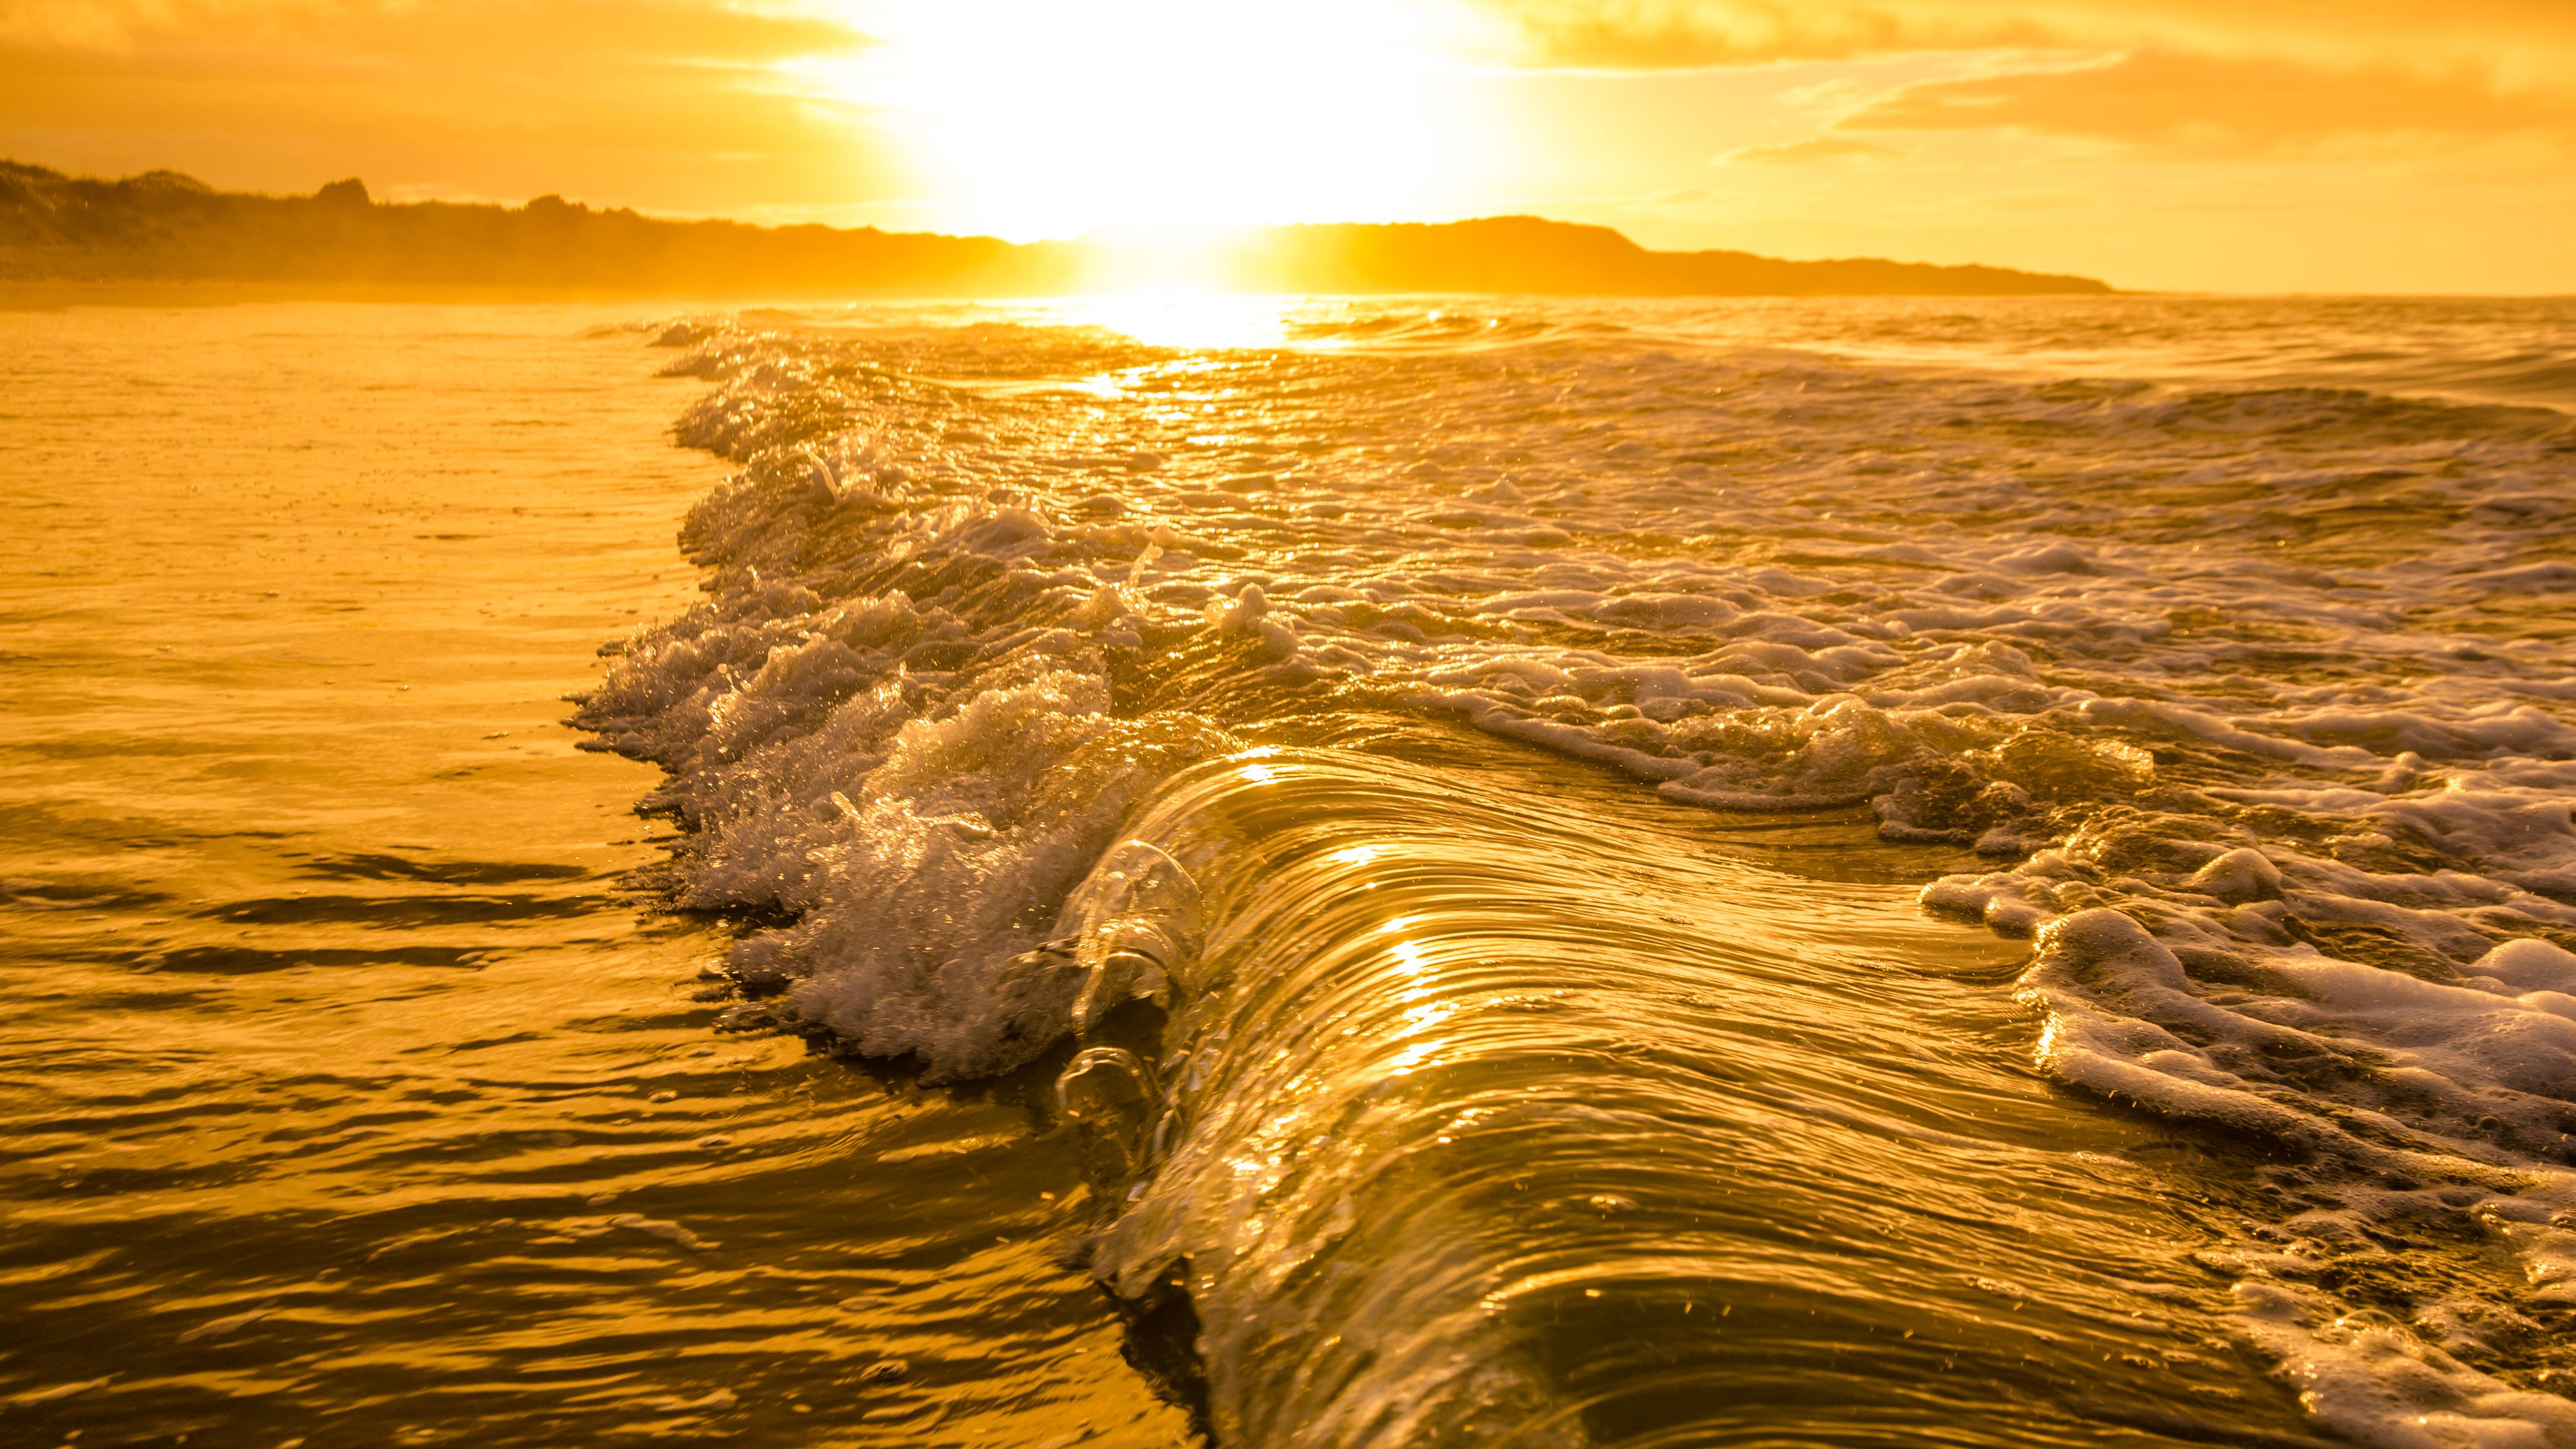 Foamy waves rolling onto a beach under a golden sunrise.